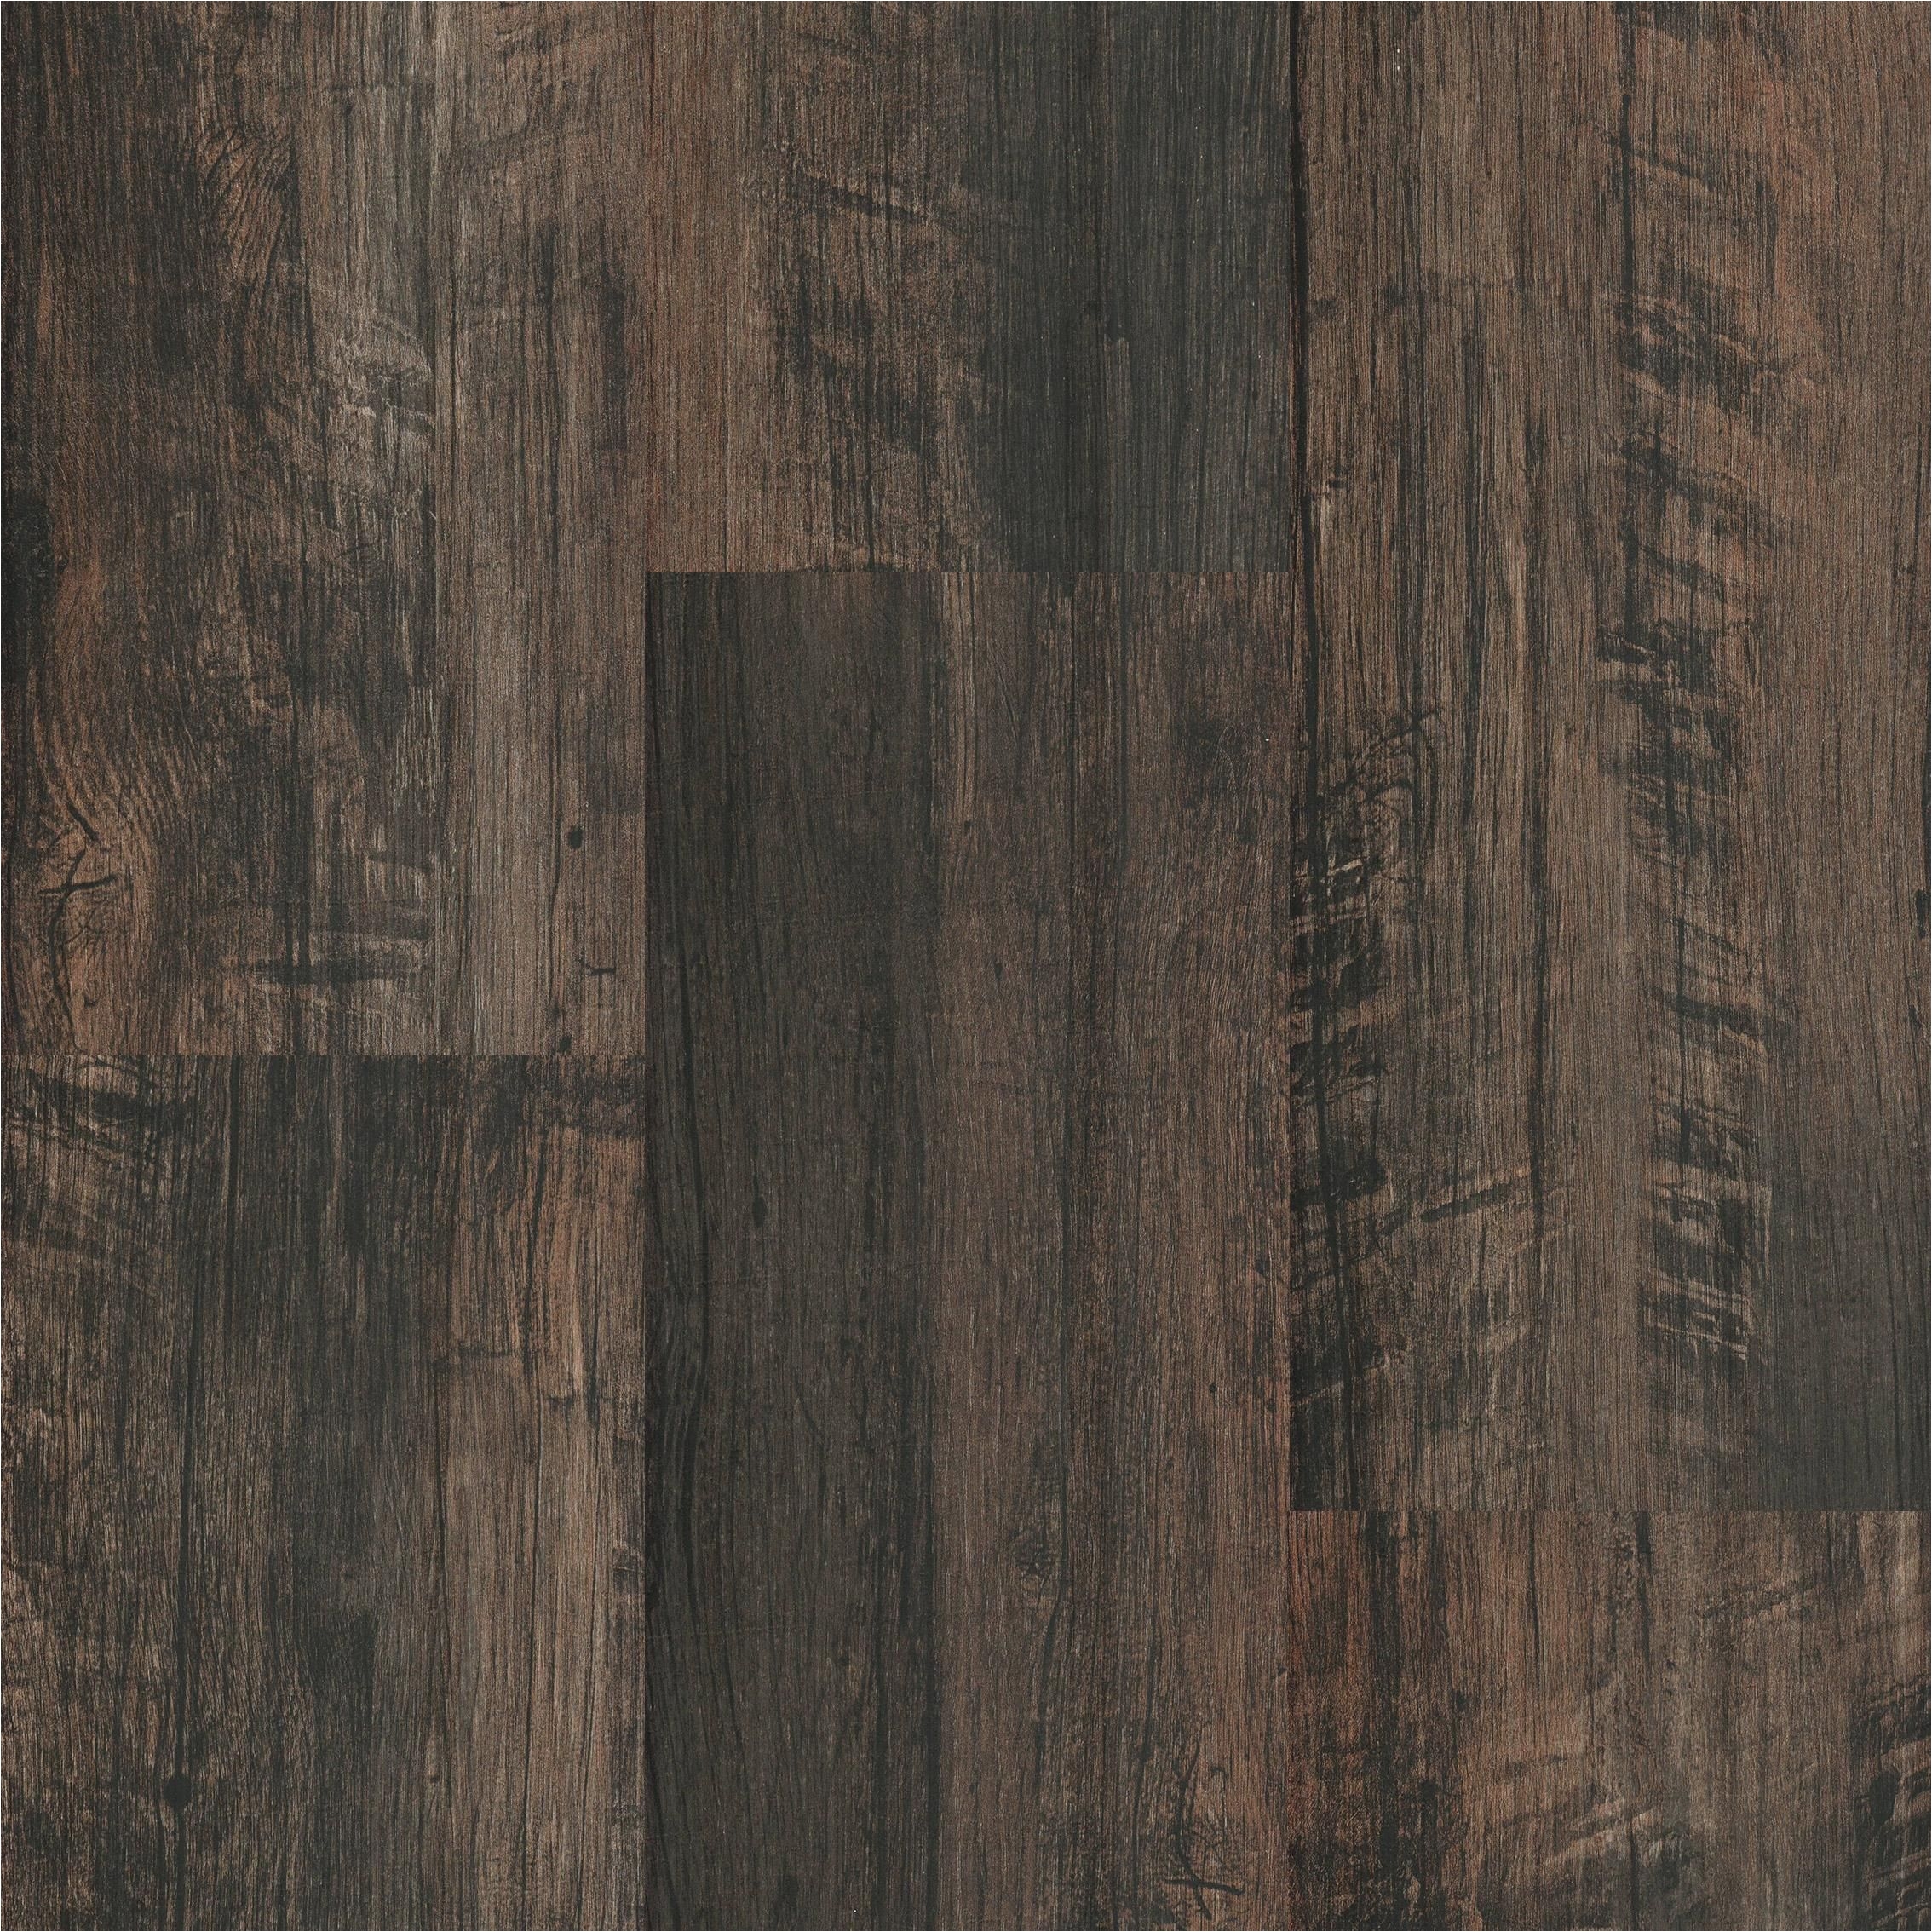 ivc tennessee meadow oak gray 6 wide waterproof click together lvt vinyl plank flooring 60028 floors pinterest plank flooring ideas and waterproof